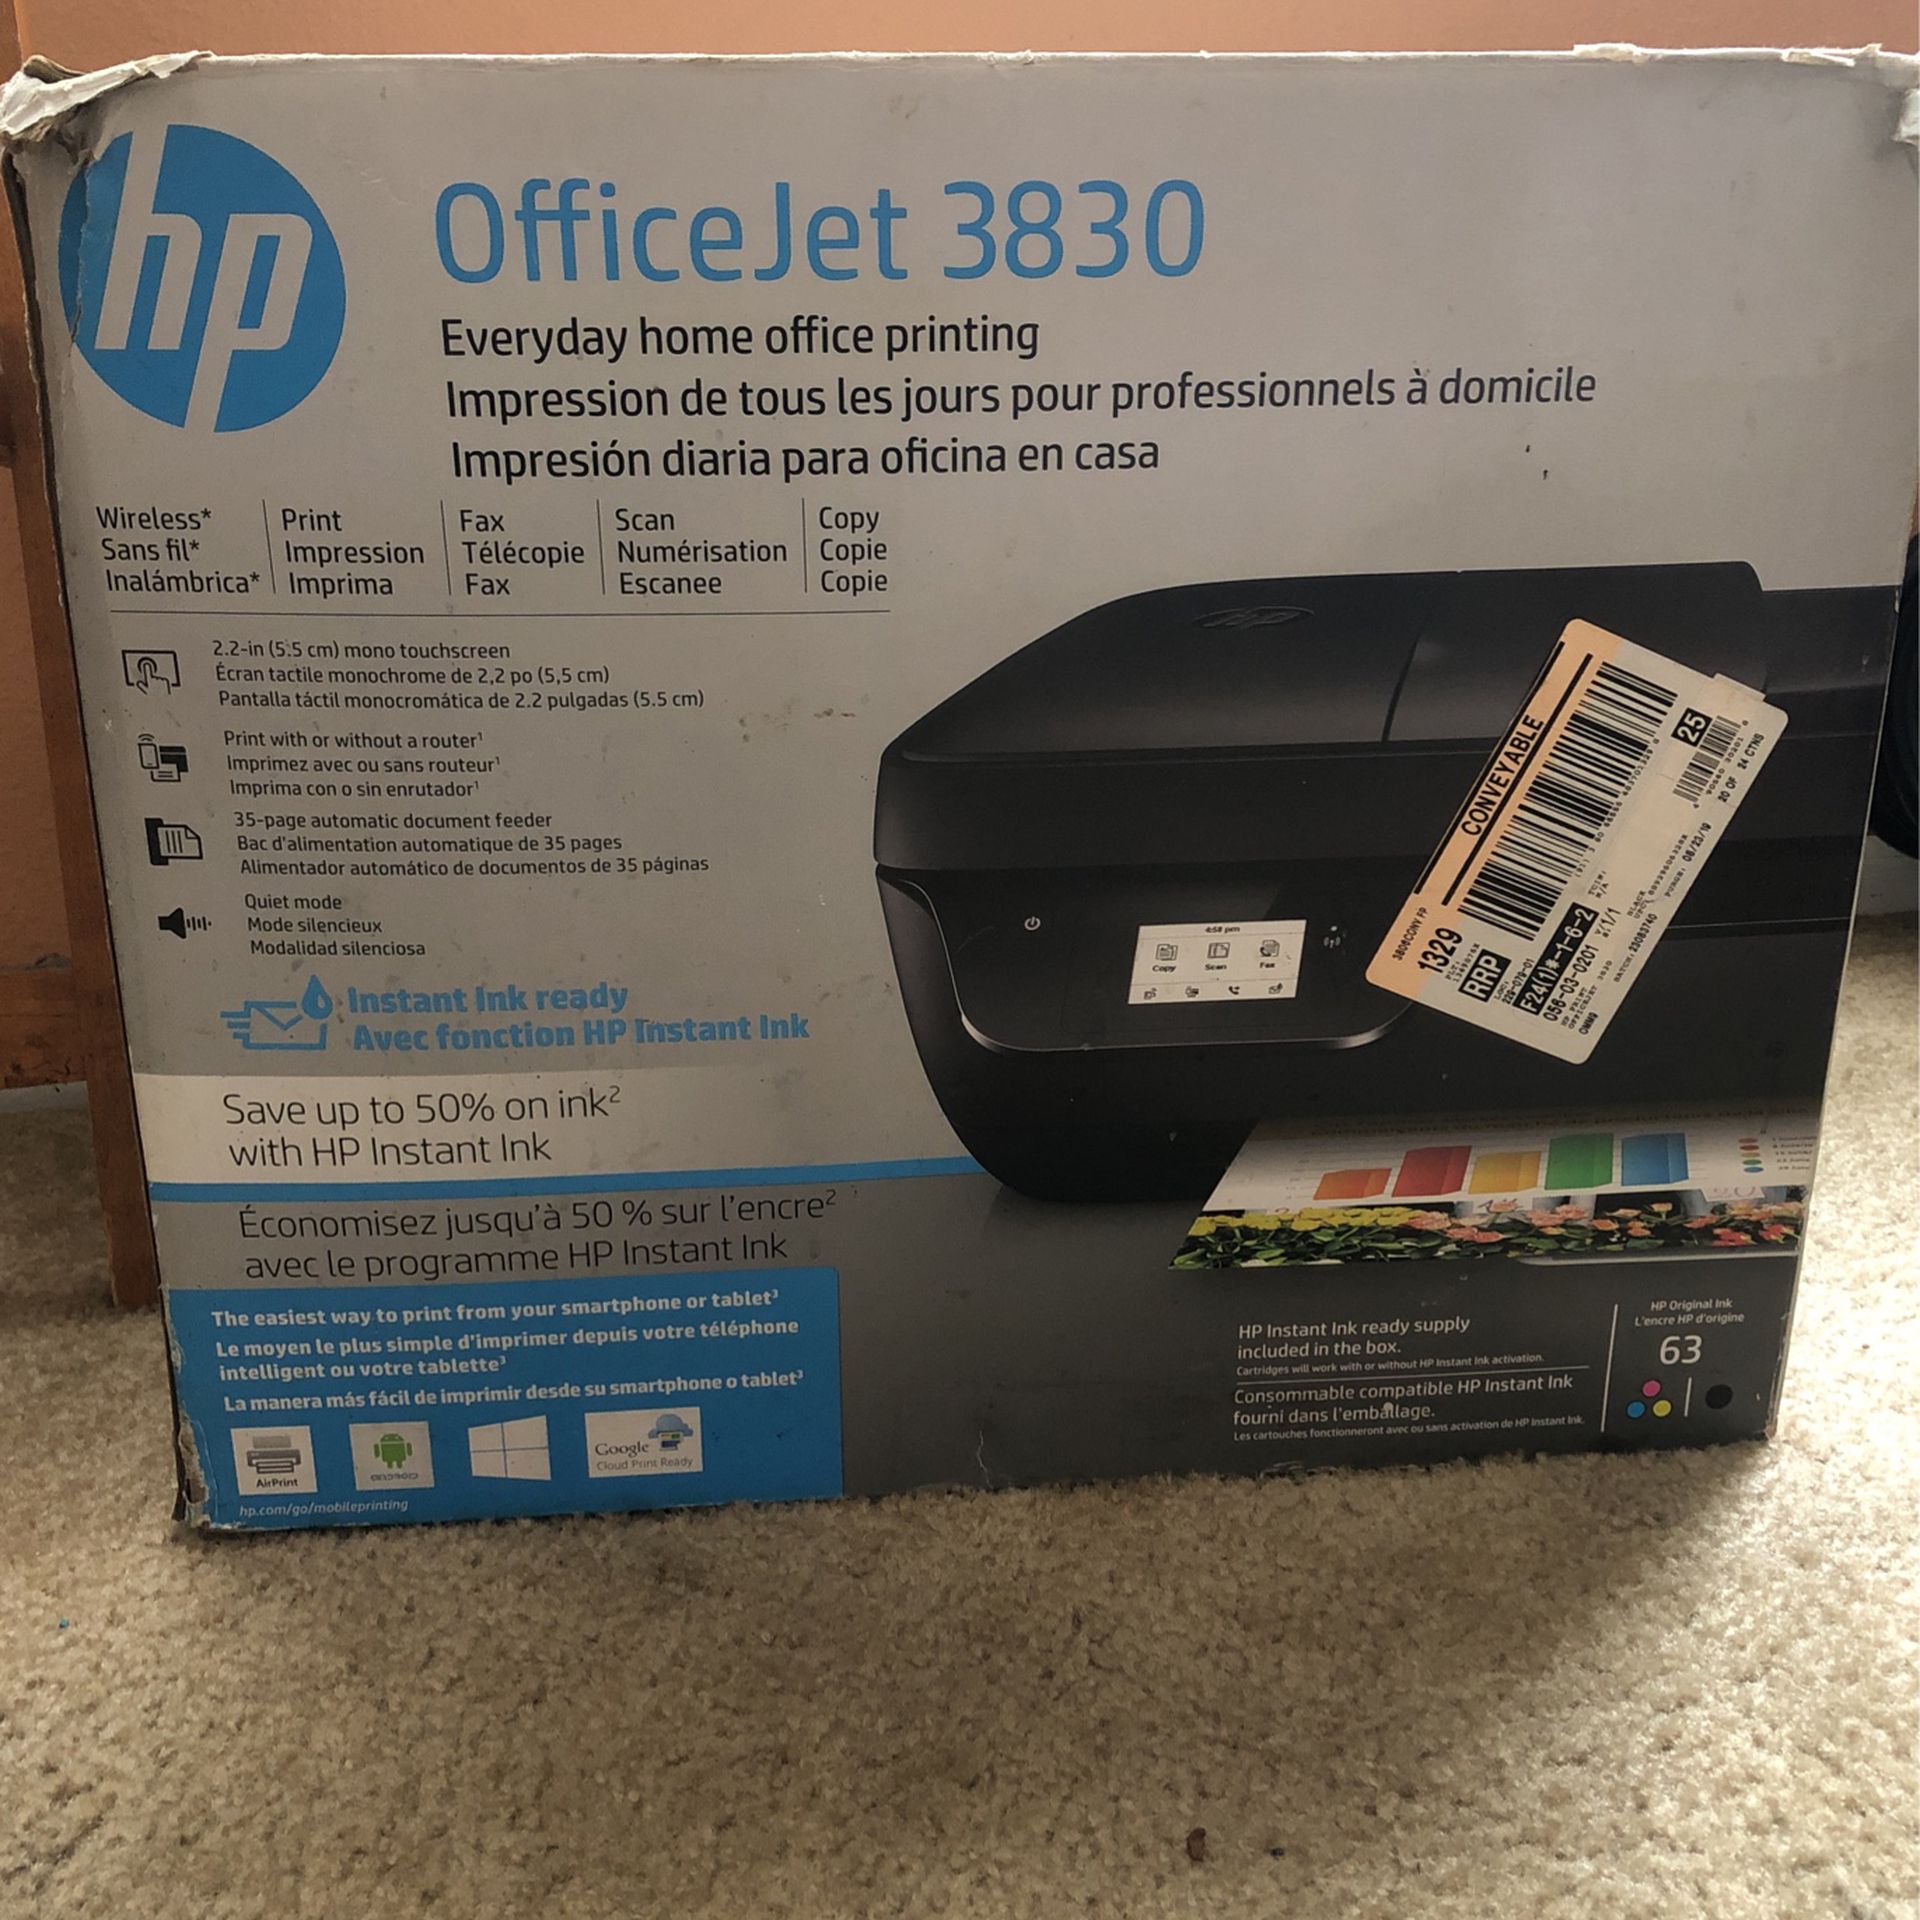 HP Office Jet Printer